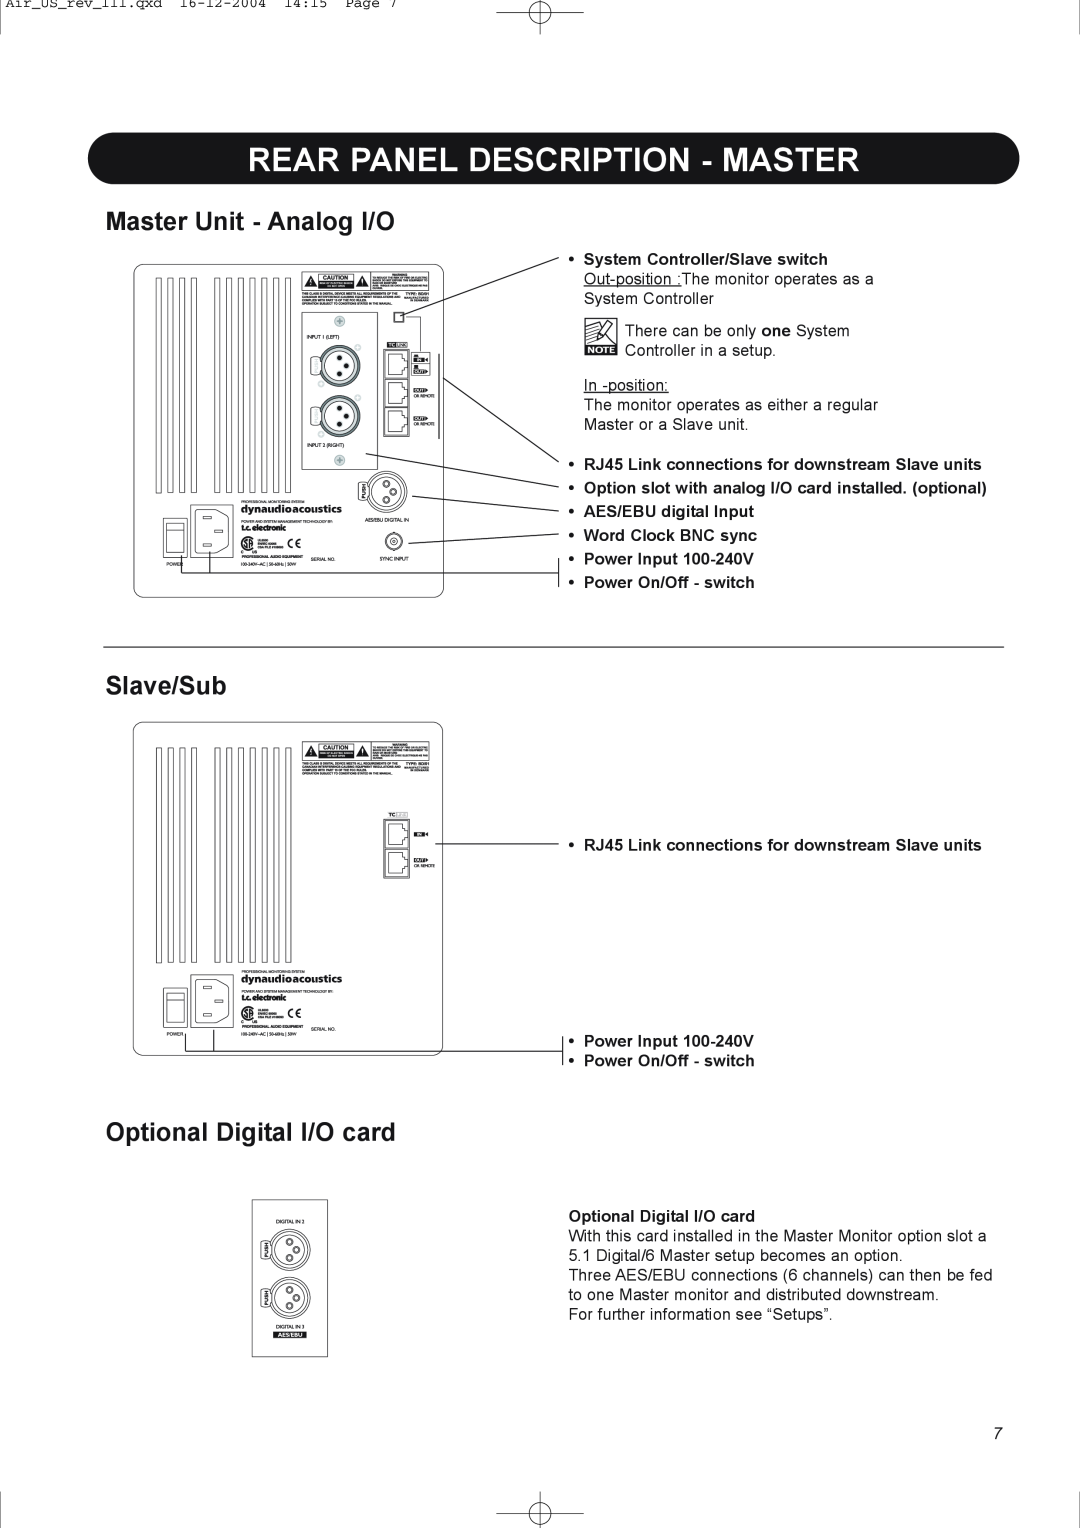 Dynaudio pmn manual Rear Panel Description - Master, Master Unit - Analog I/O, Slave/Sub, Optional Digital I/O card 